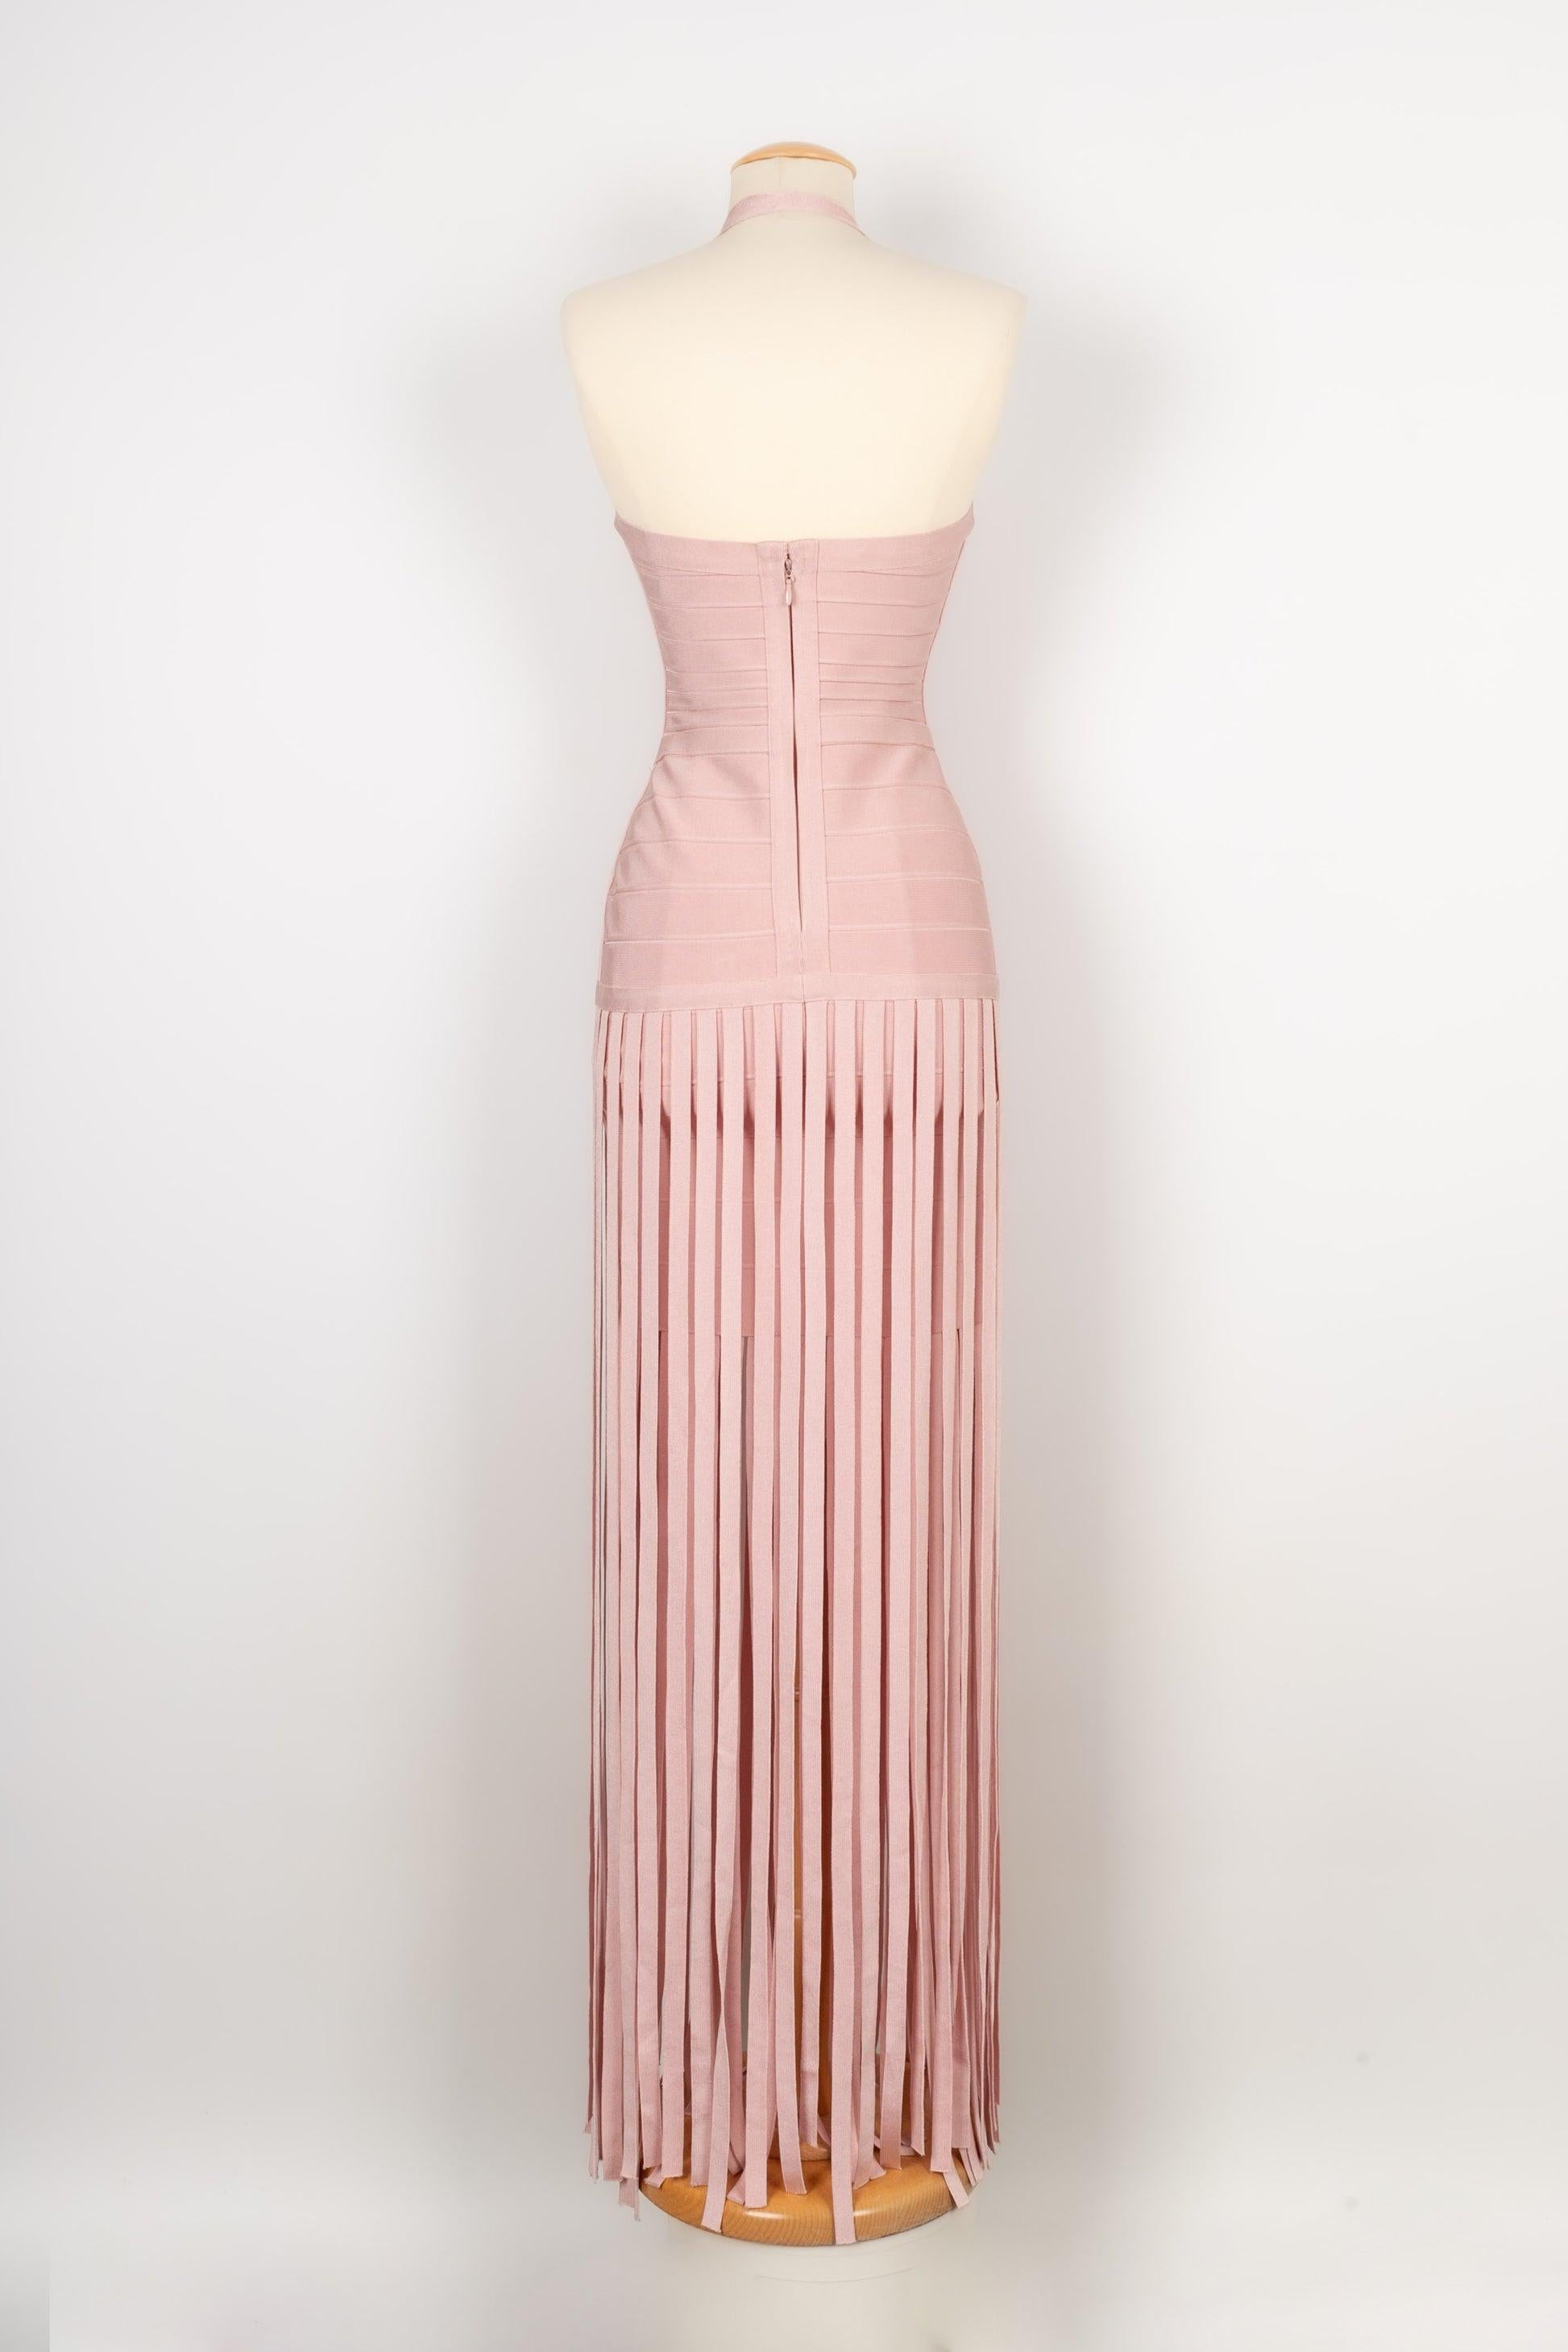 Hervé Léger Elasticated Powder Pink Dress In Excellent Condition For Sale In SAINT-OUEN-SUR-SEINE, FR